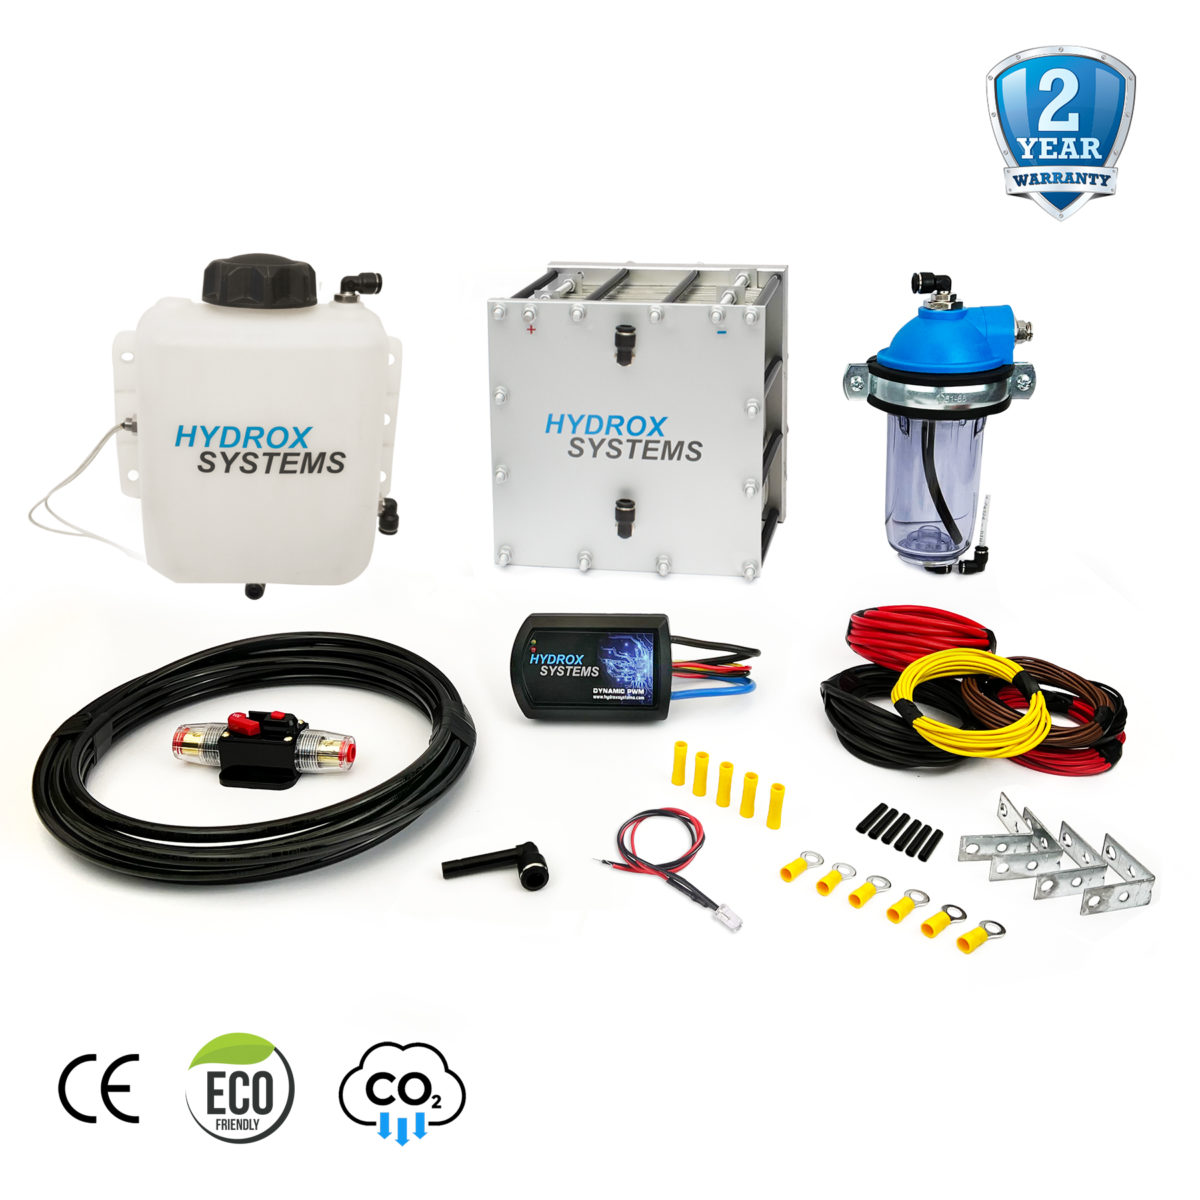 hydrogen kit for truck + pwm